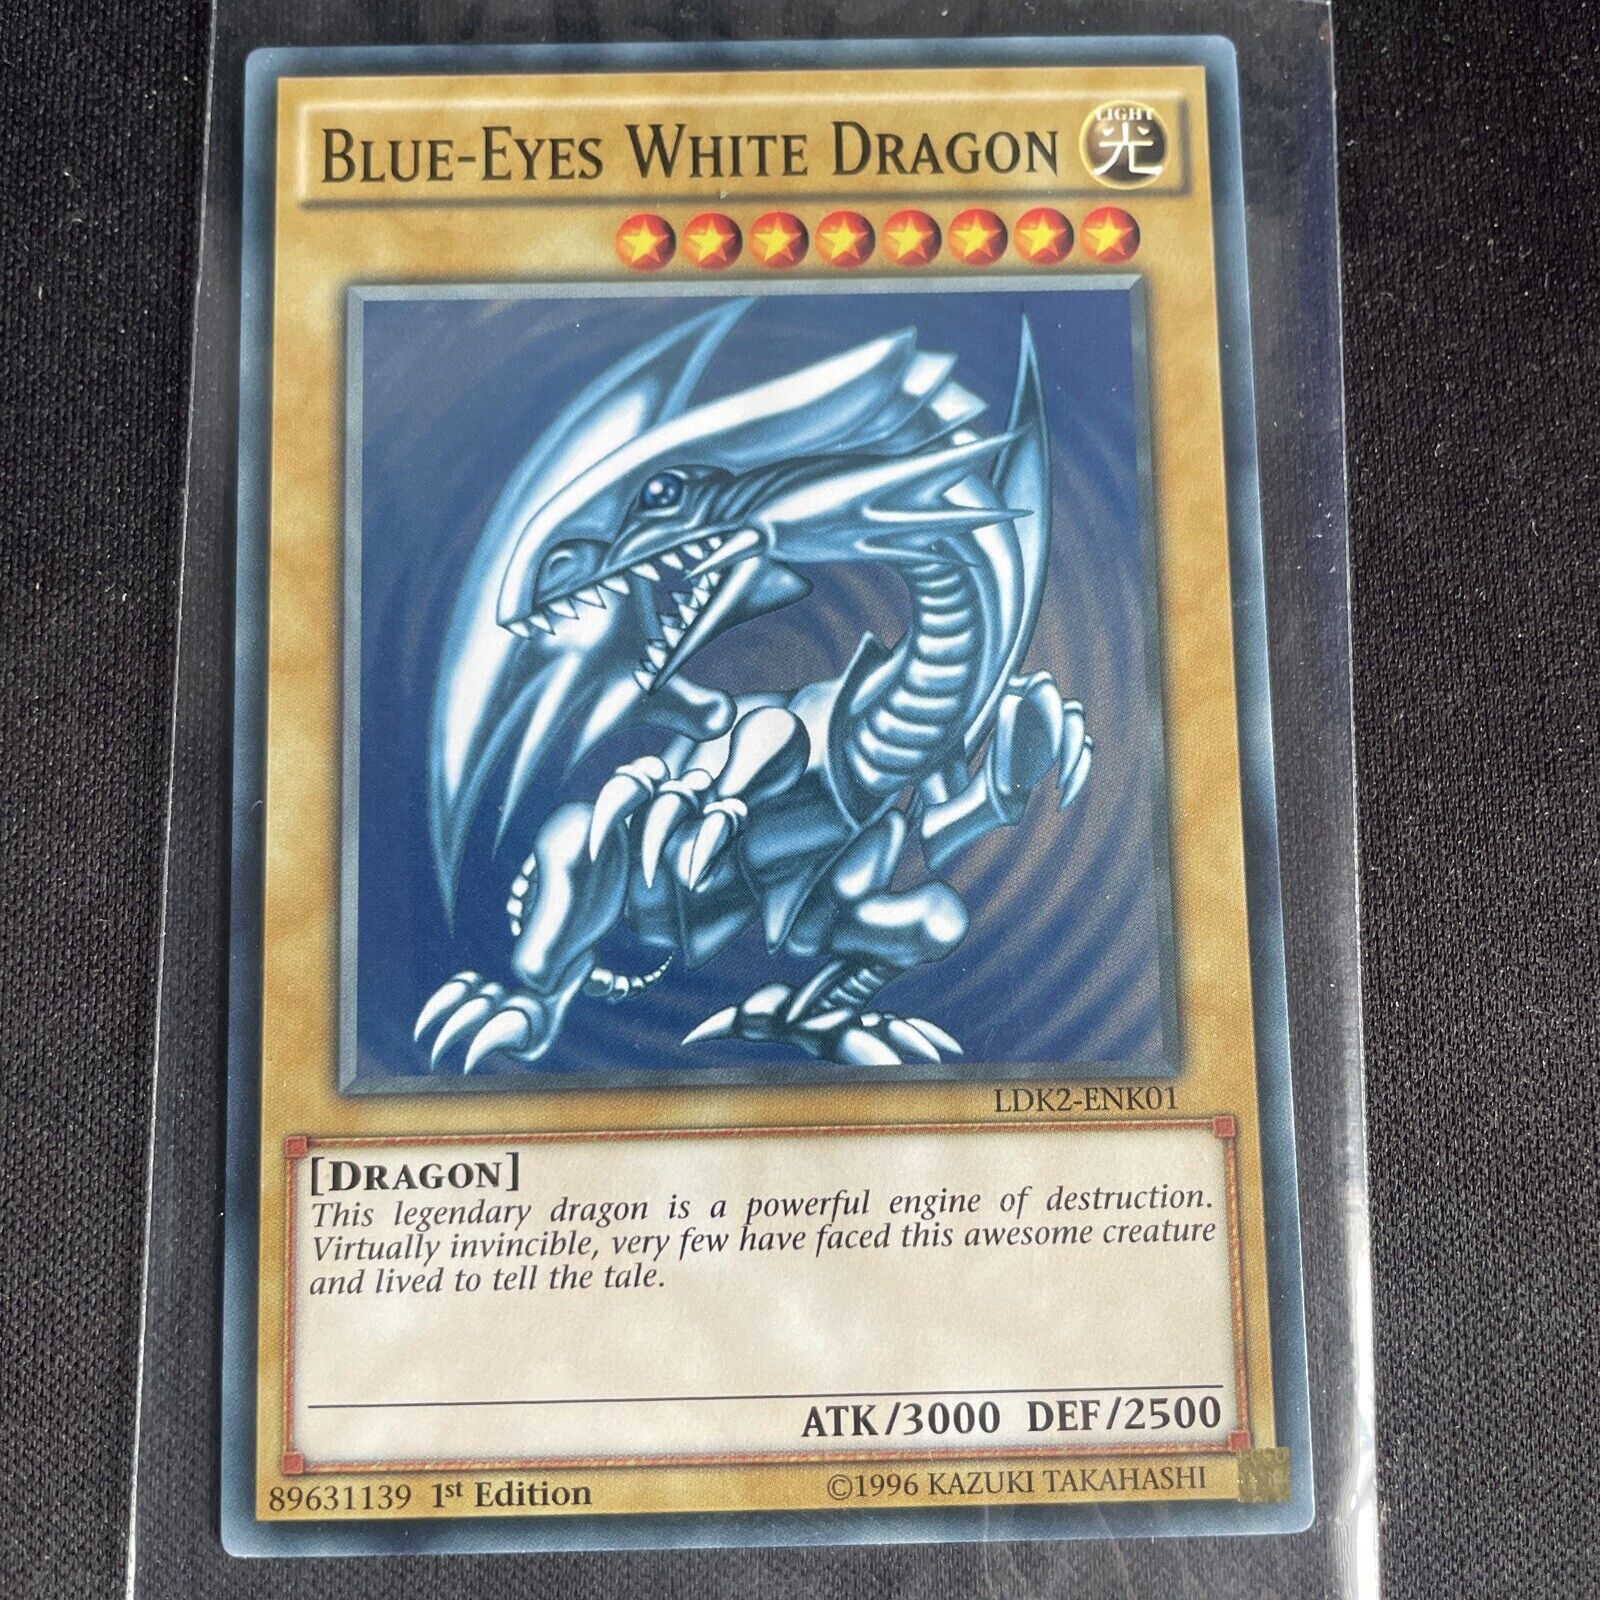 Blue-Eyes White Dragon - LDK2-ENK01 - Common - 1st Edition - Yugioh Classic Art